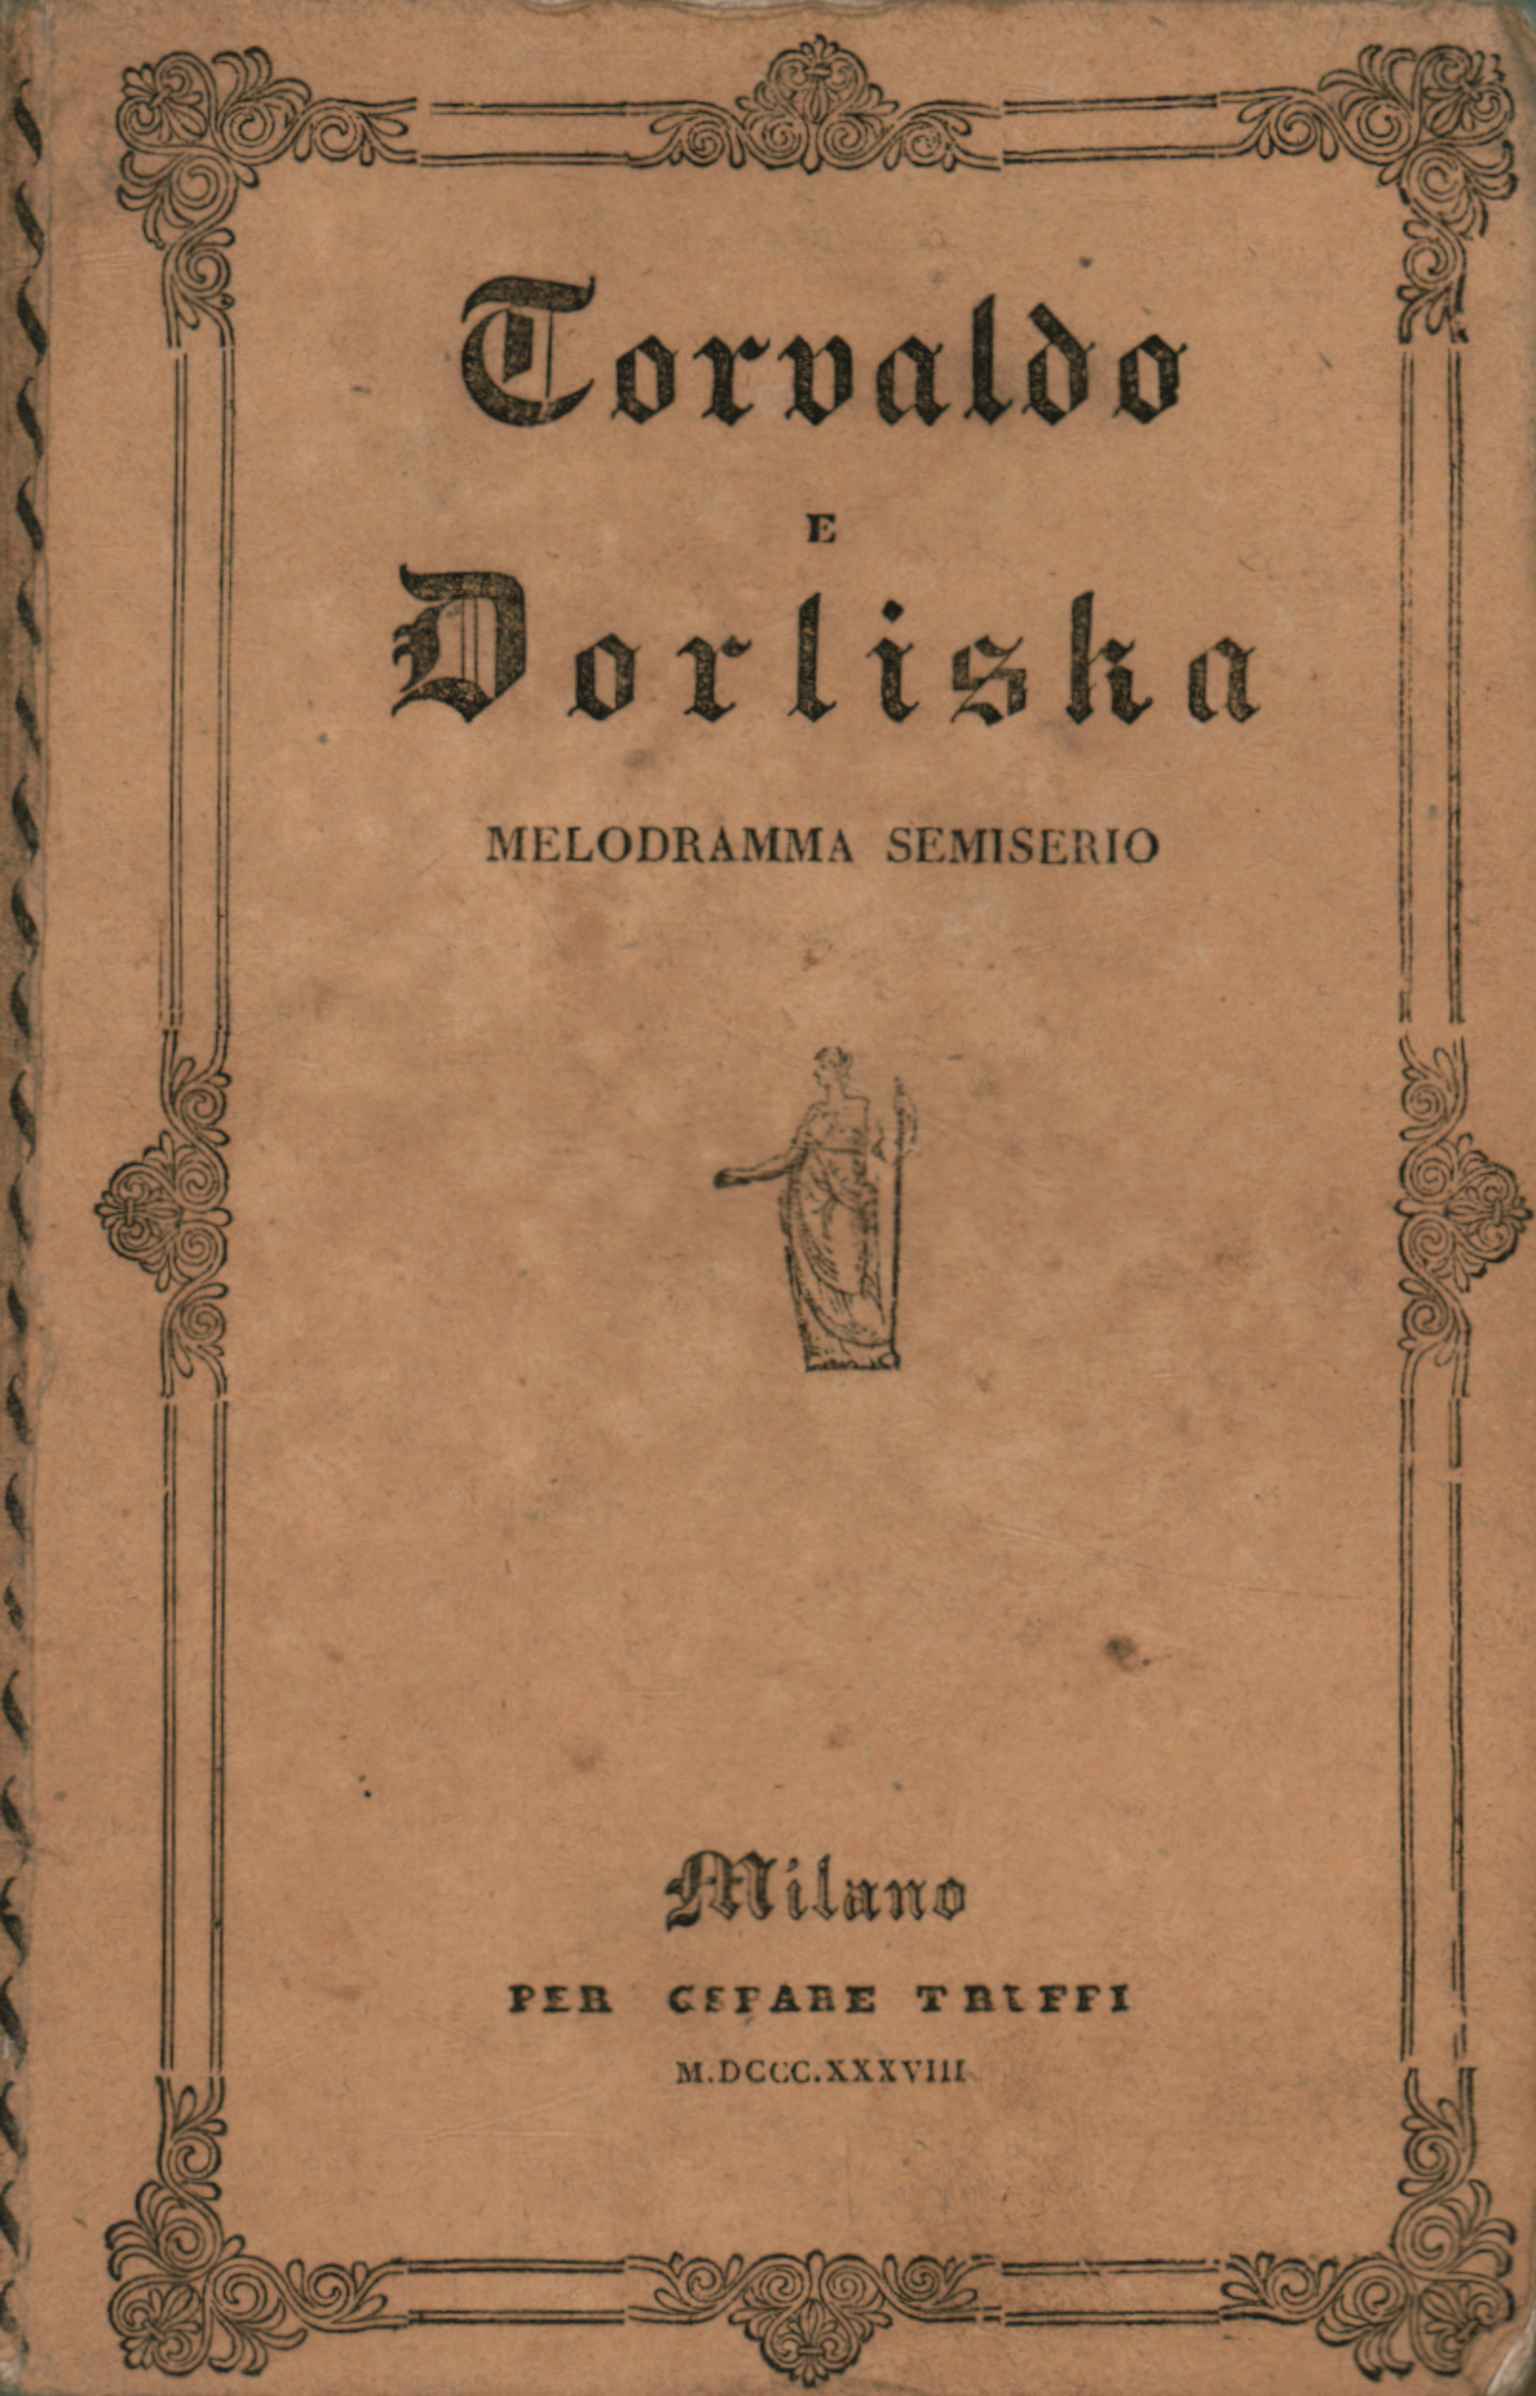 Torvaldo and Dorliska semi-serious melodrama%2,Torvaldo and Dorliska semi-serious melodrama%2